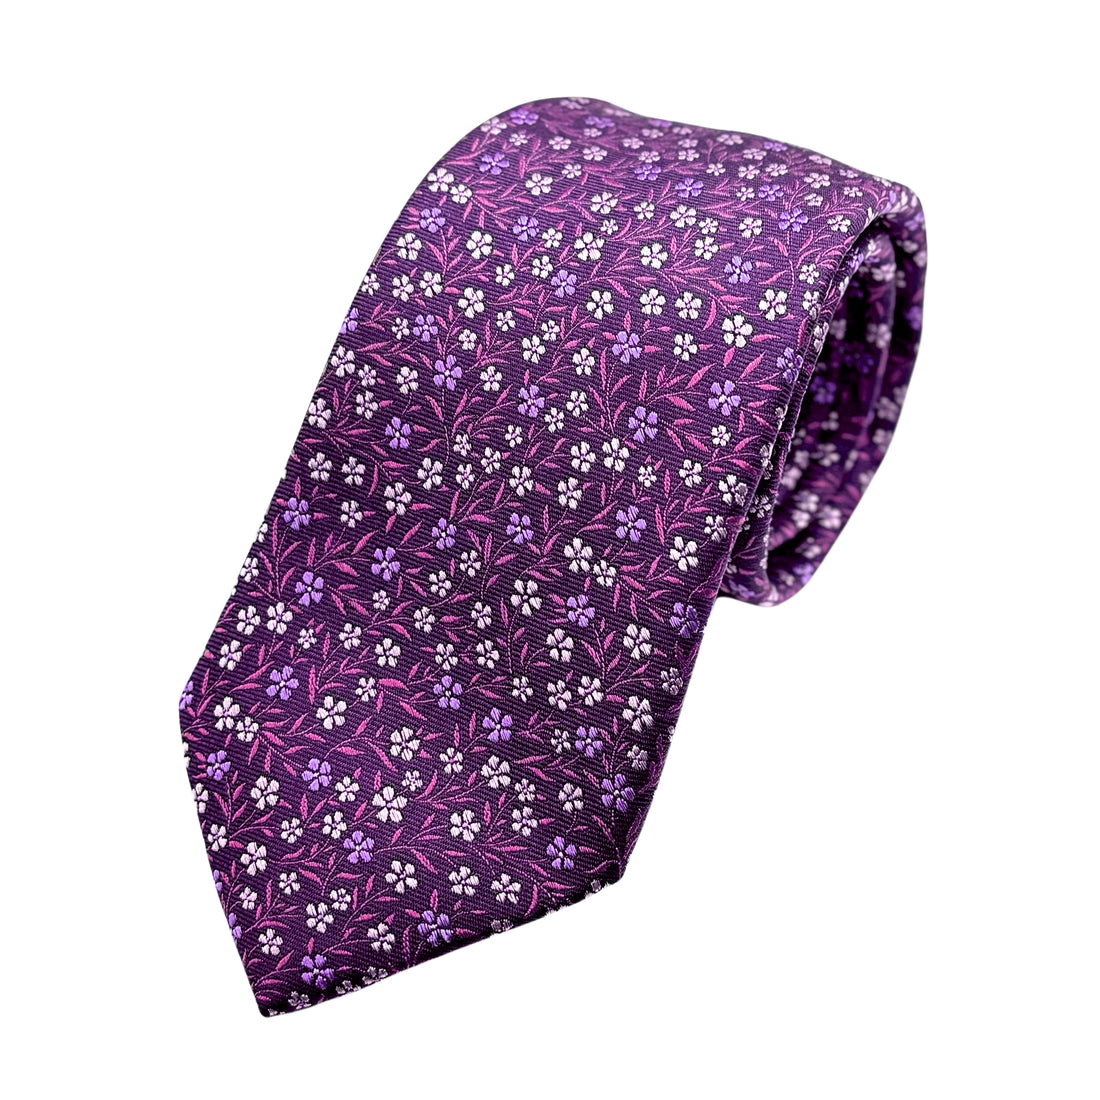 James Adelin Luxury Silk Neck Tie in Textured Mini Floral Design